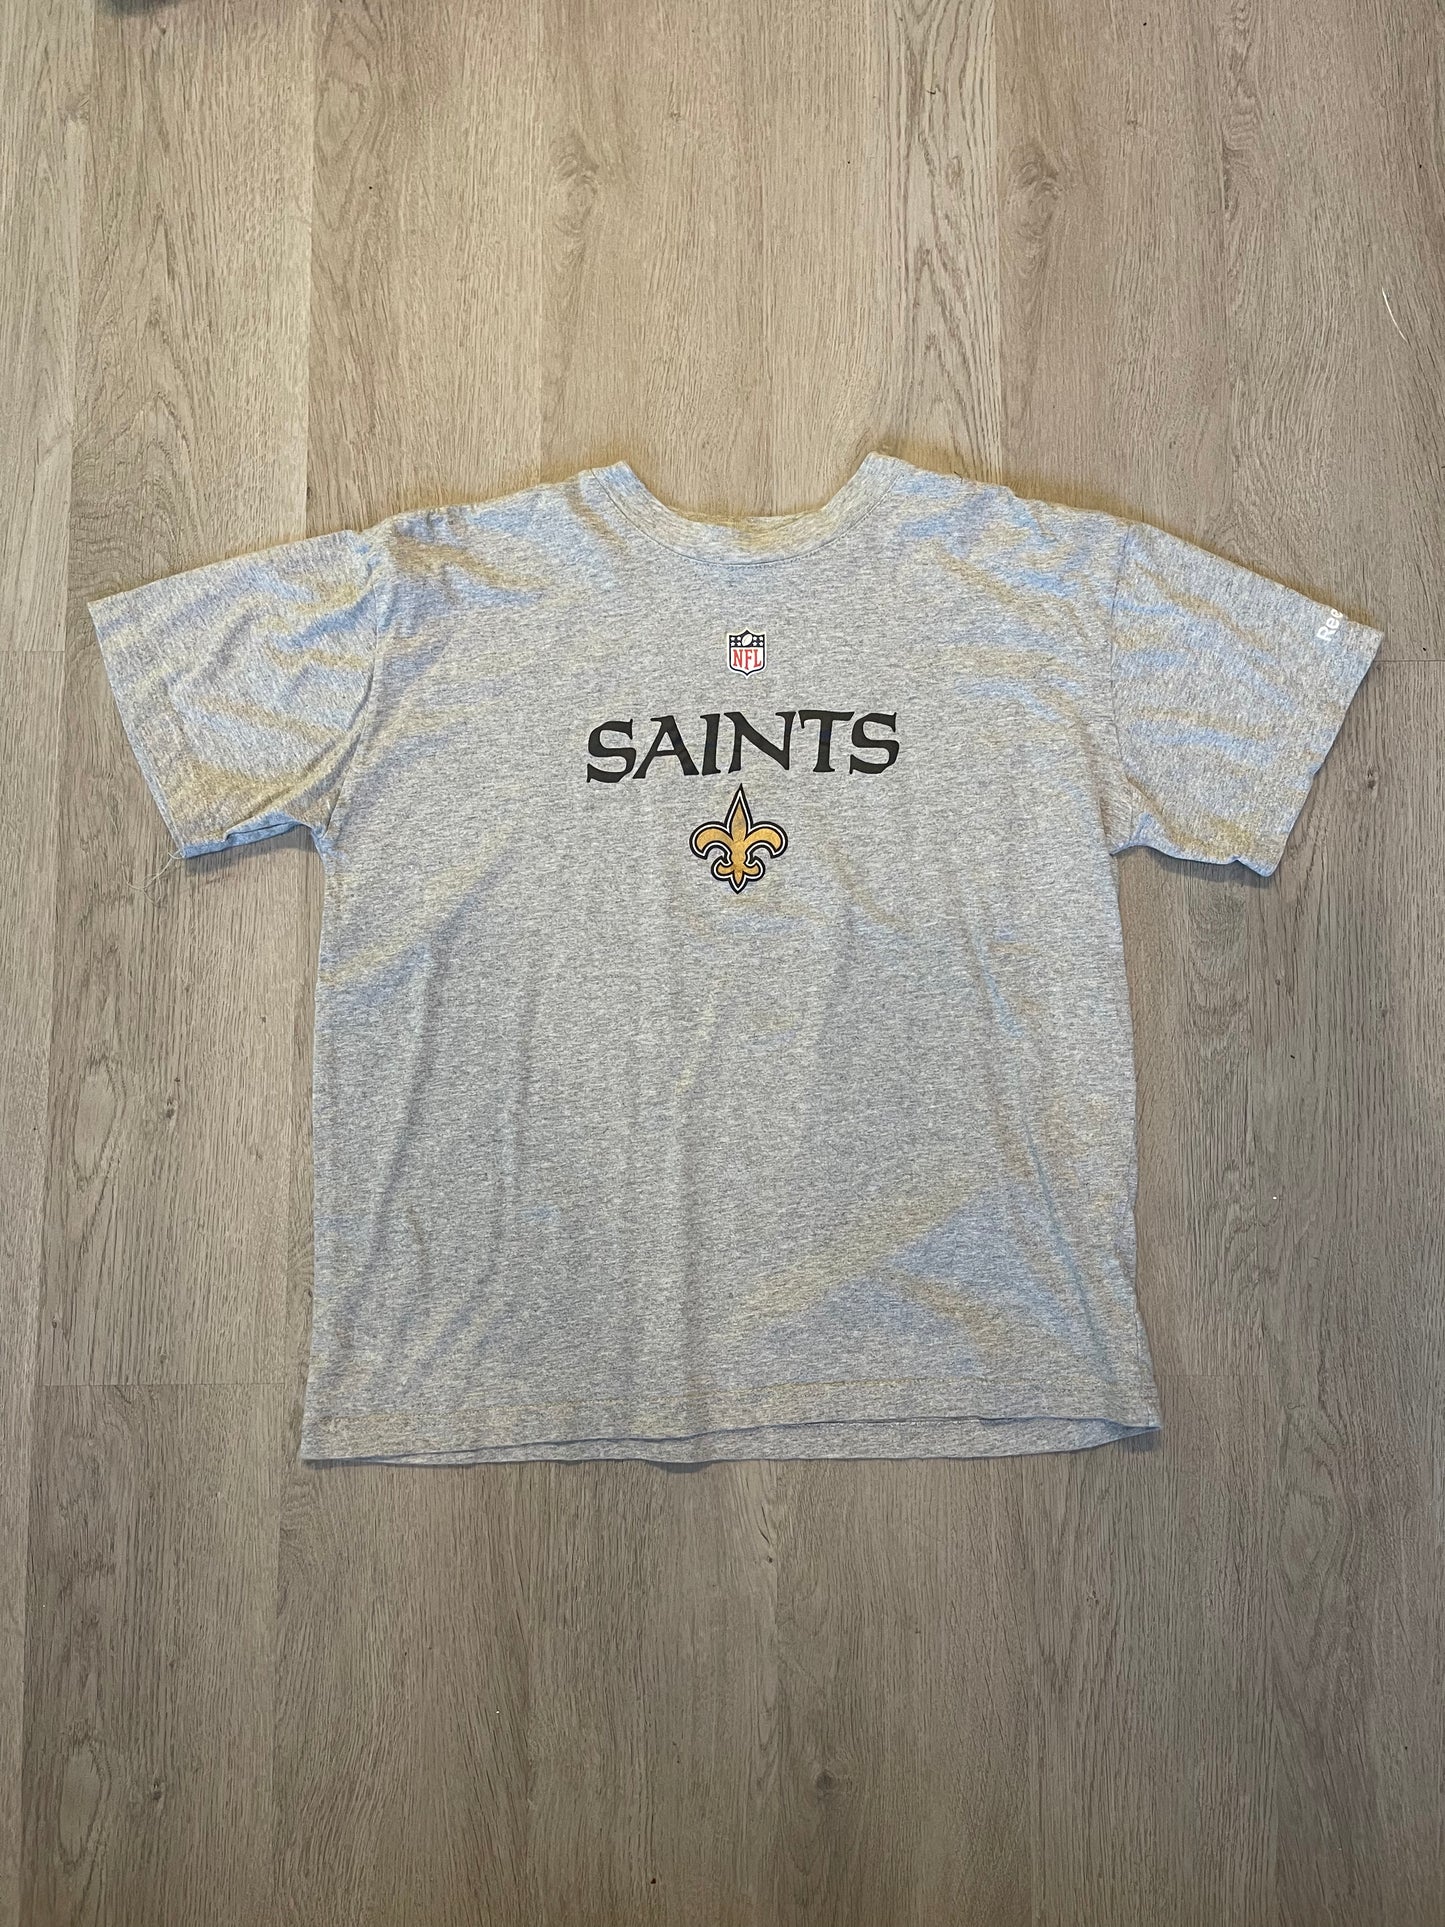 NFL Saints T-Shirt Kids XL